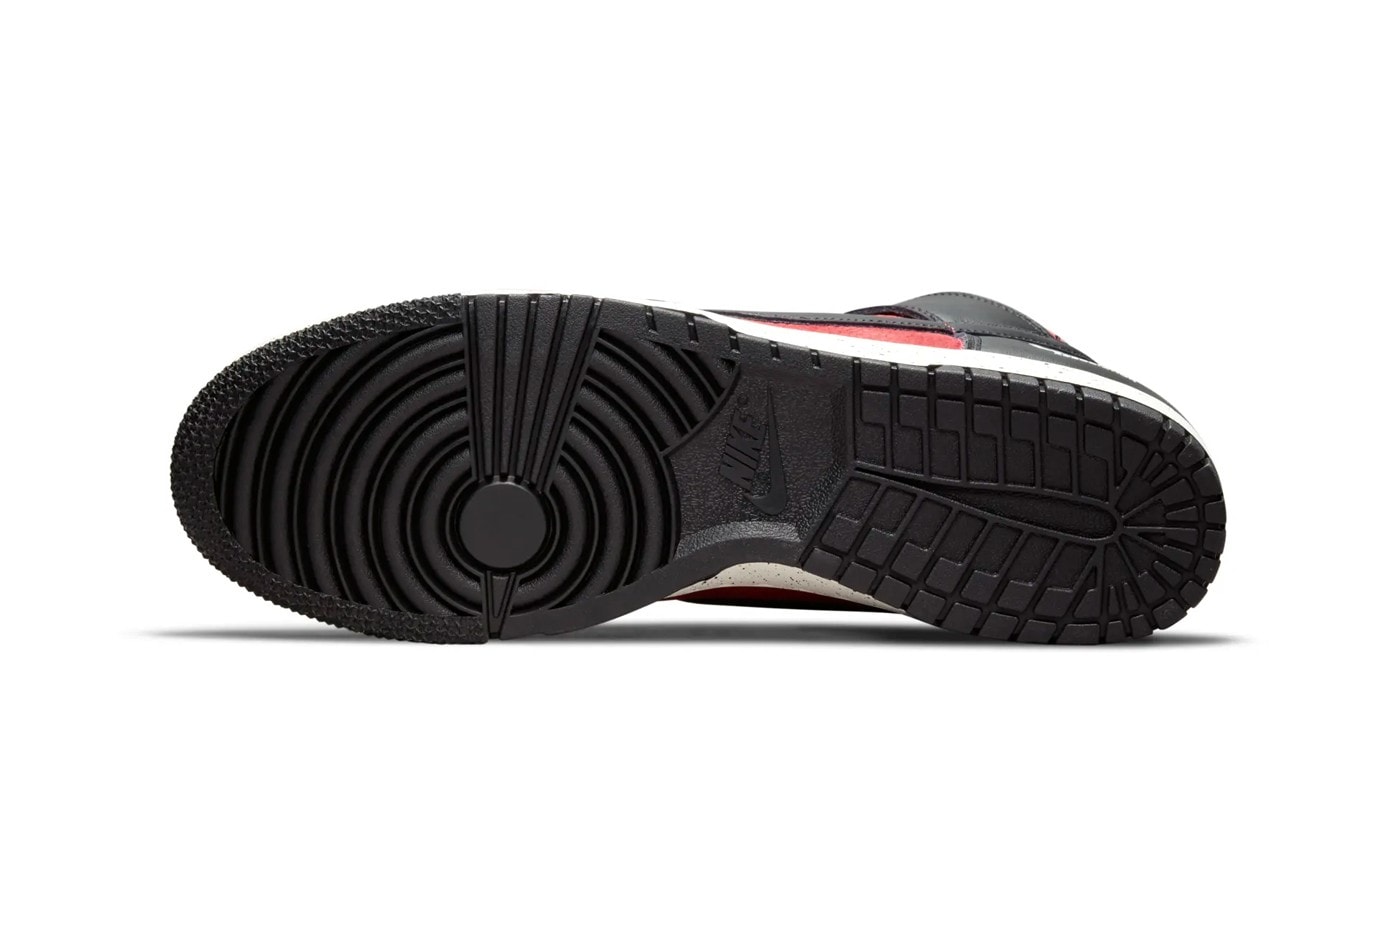 UNDERCOVER x Nike Dunk High 最新聯名鞋款「UBA」正式登場